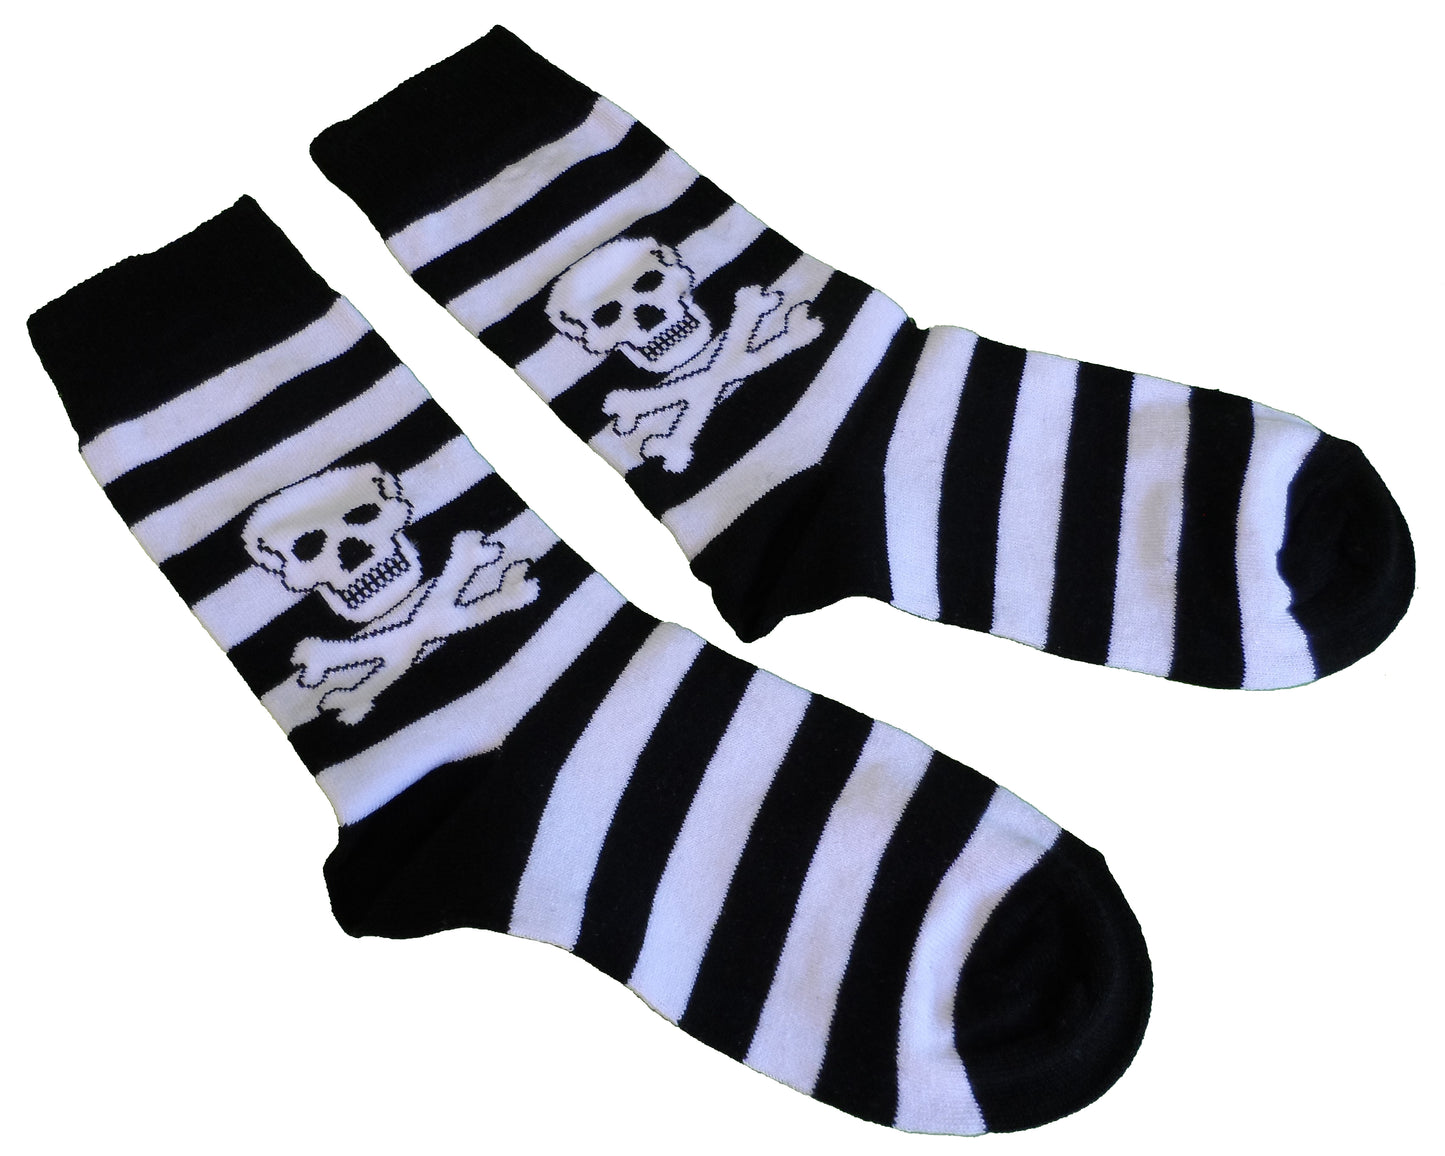 Ladies 2 Pair Black/White Striped Skull and Crossbone Socks